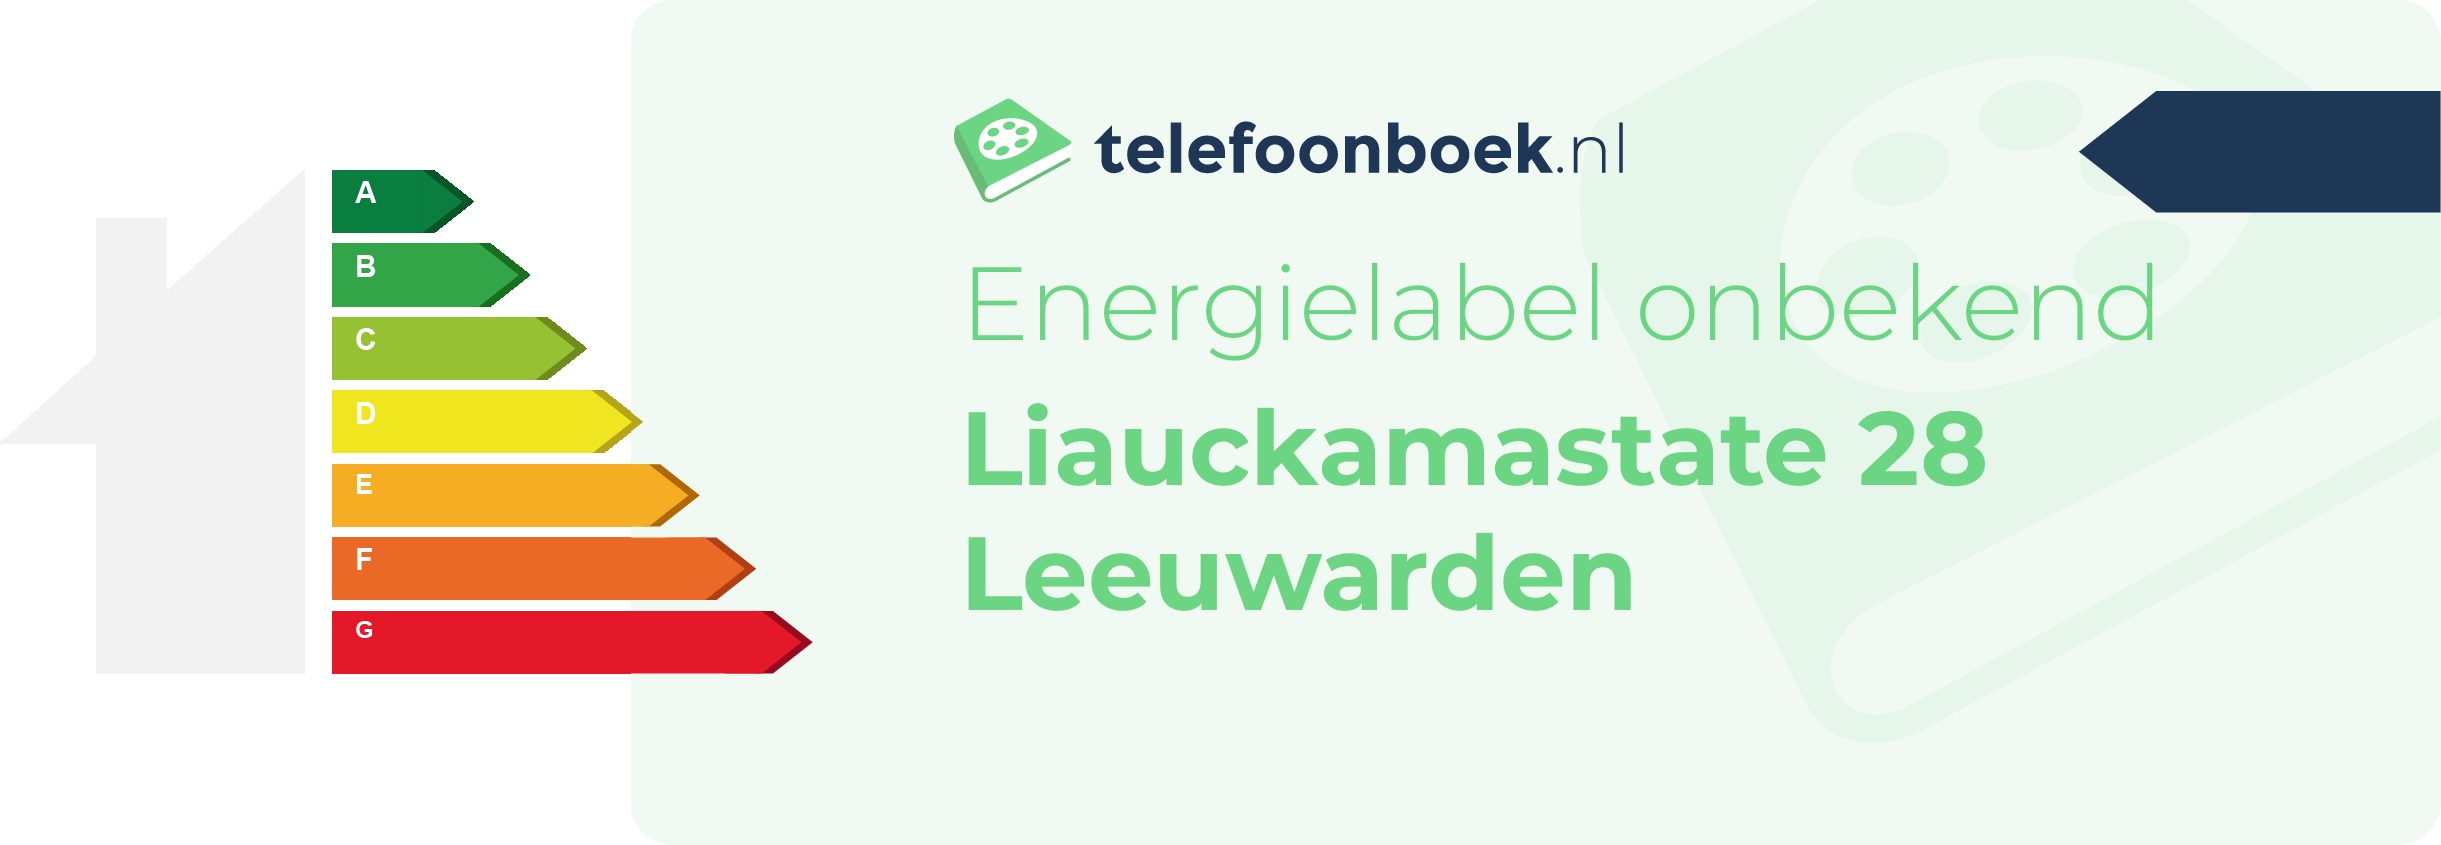 Energielabel Liauckamastate 28 Leeuwarden